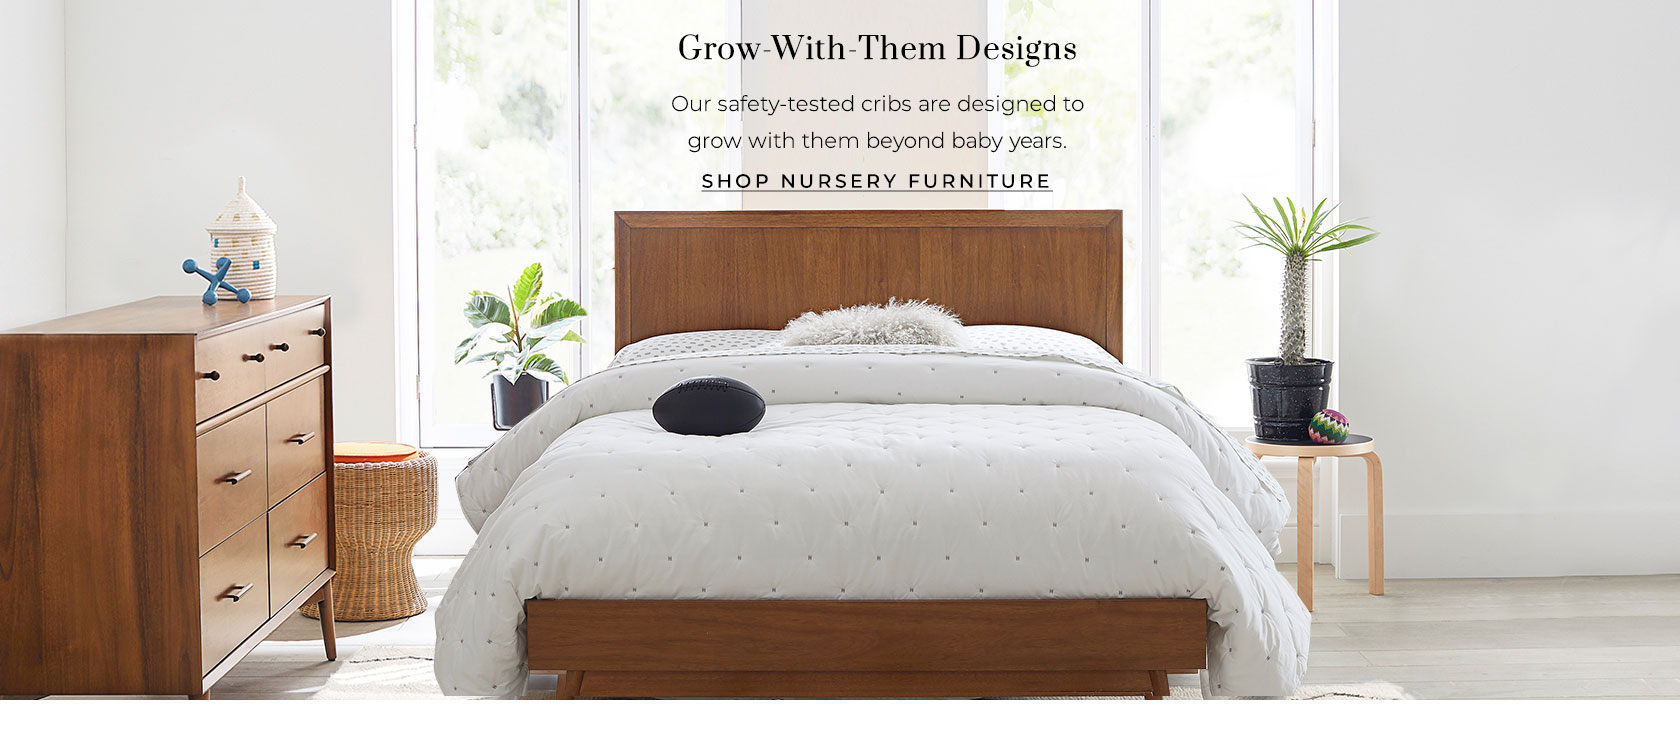 Grow With Them Designs - Shop Nursery Furniture 